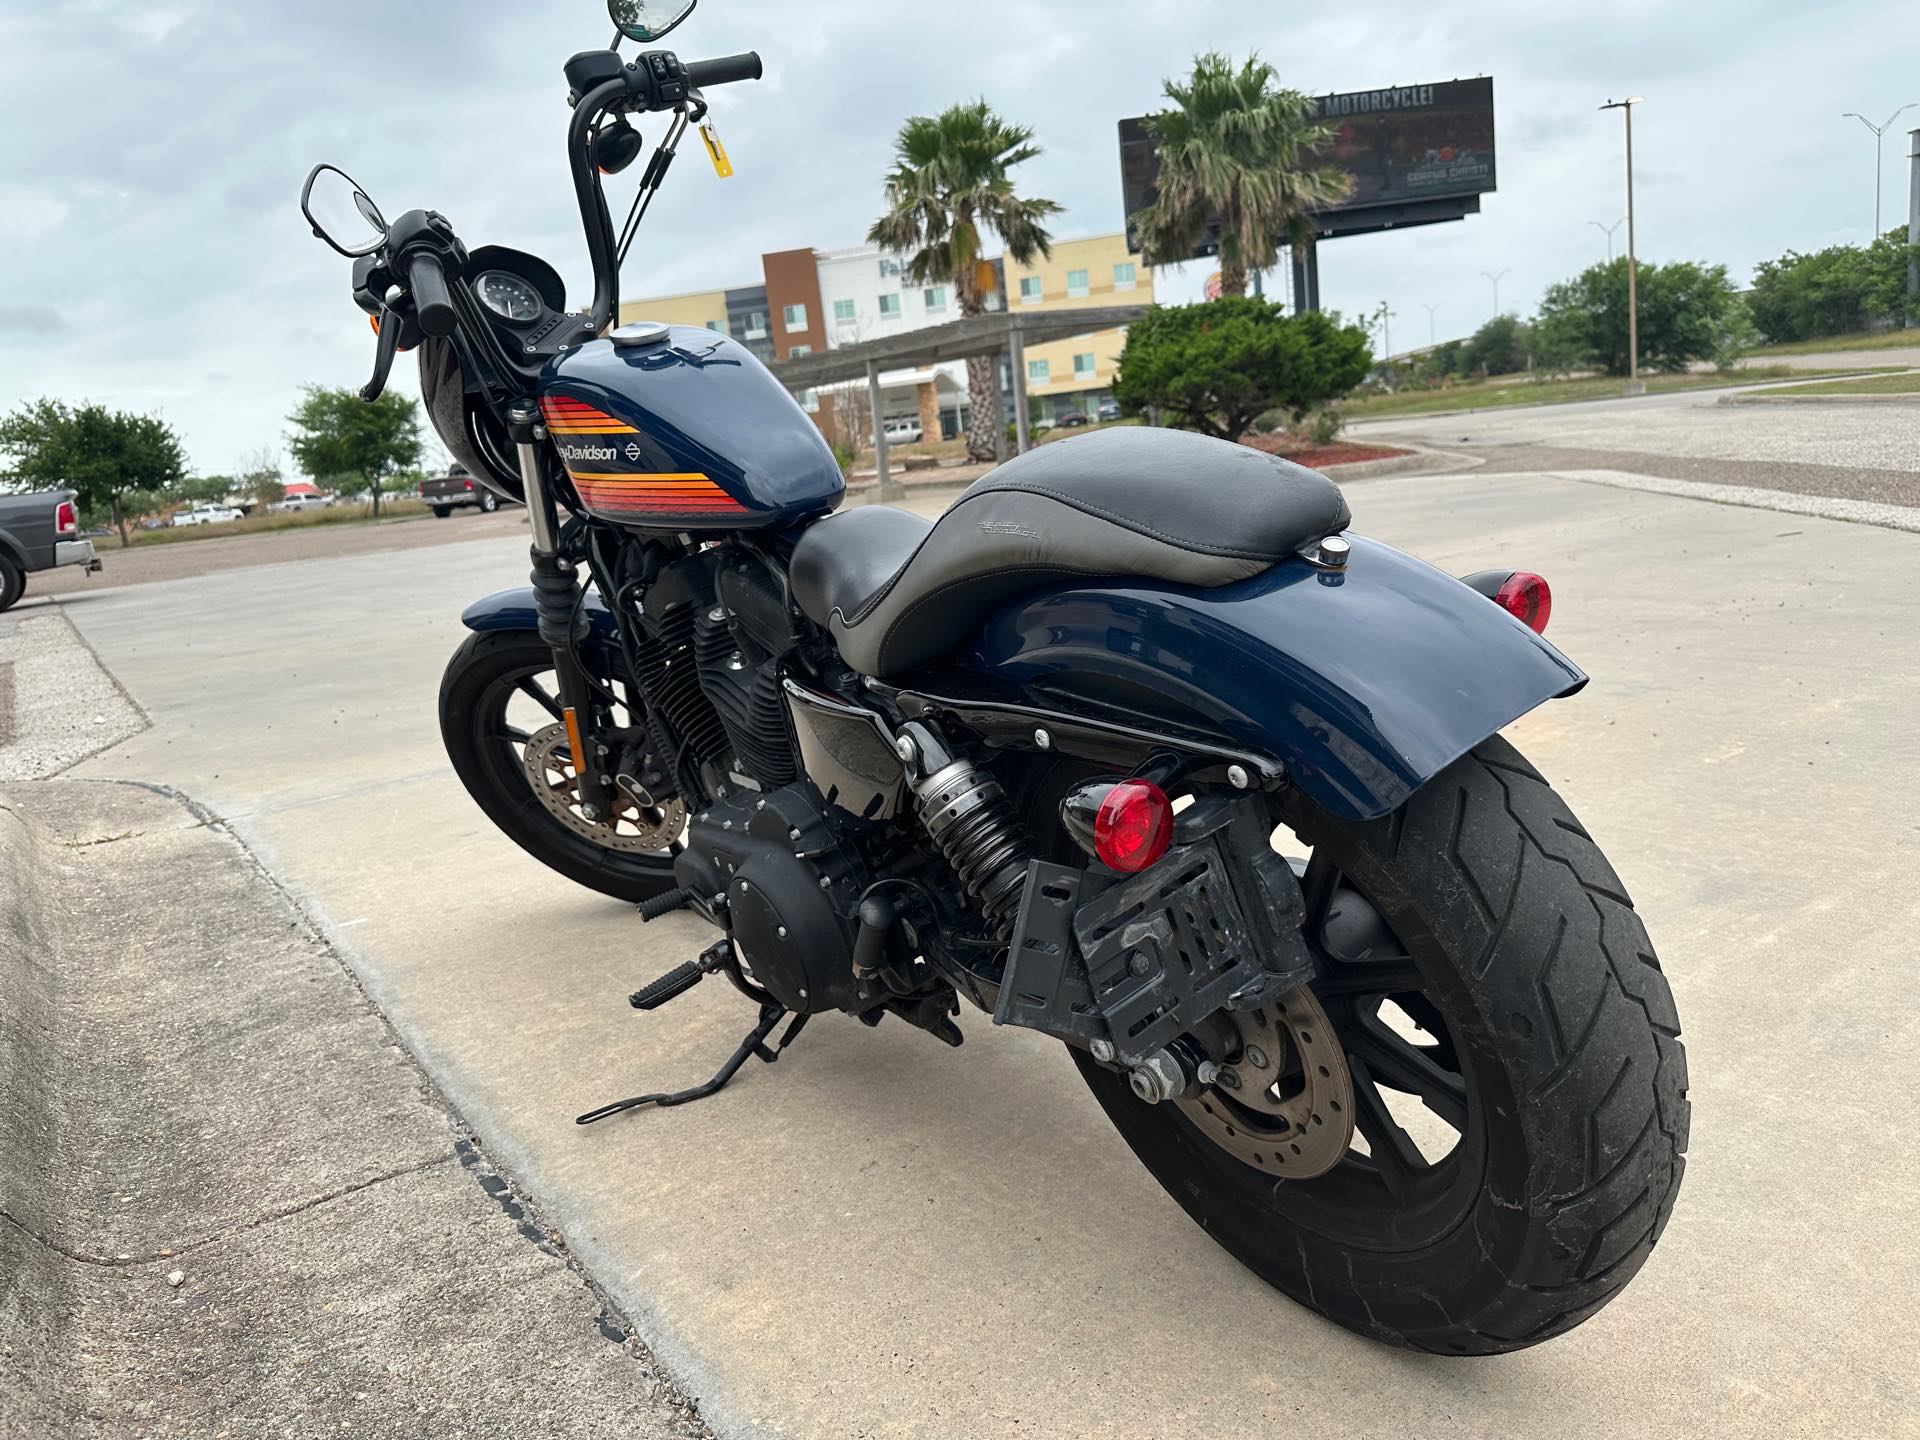 2020 Harley-Davidson Sportster Iron 1200 at Corpus Christi Harley Davidson